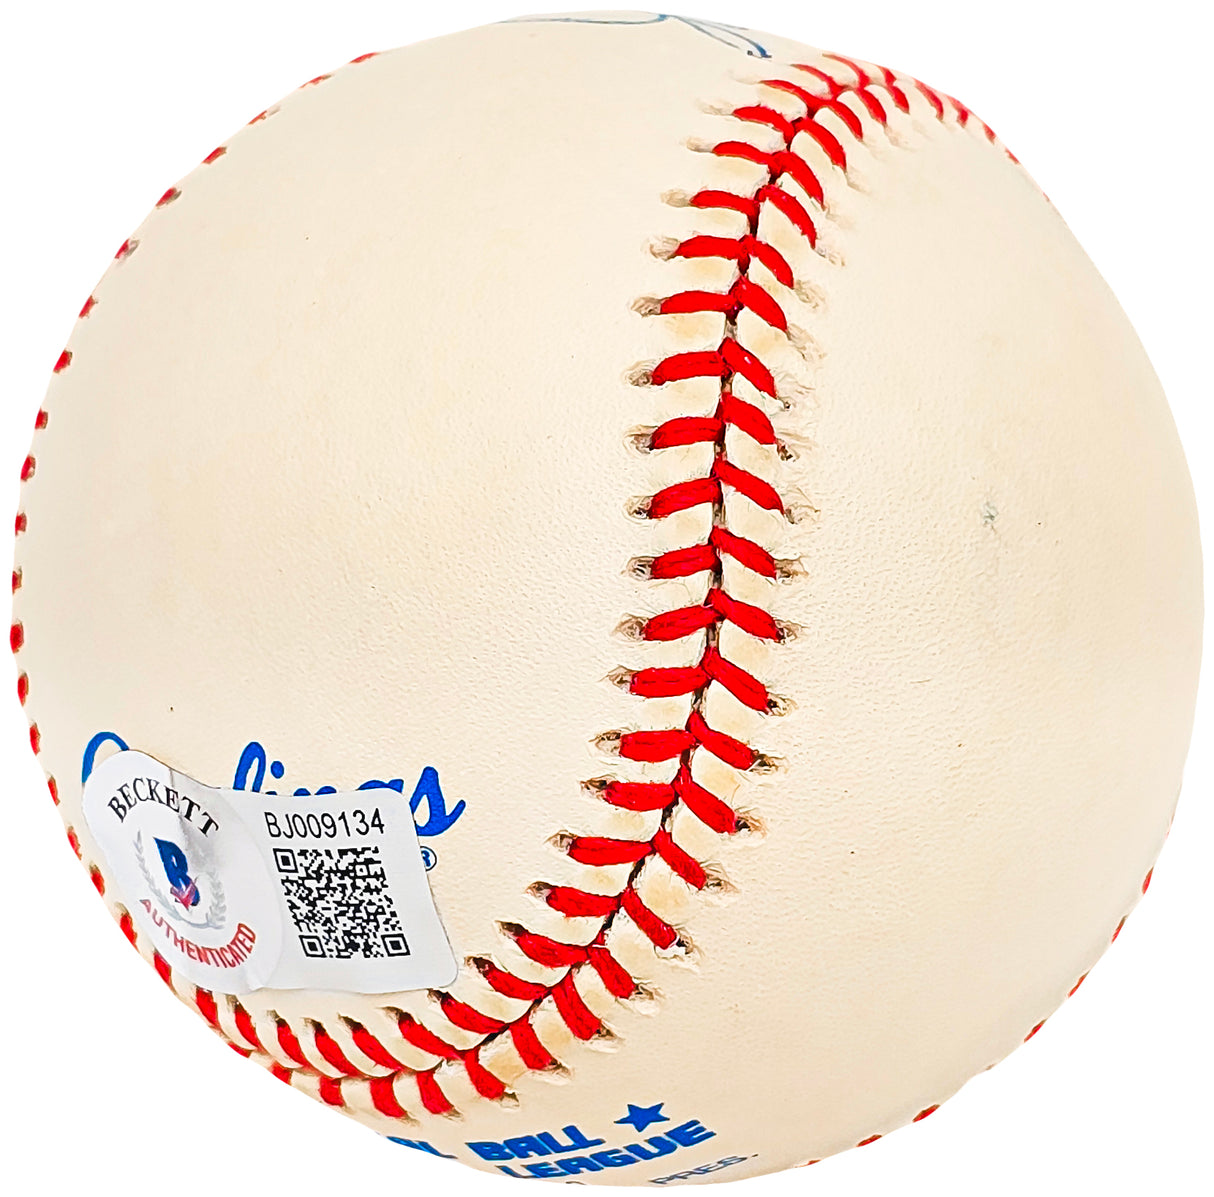 John Hale Autographed Official AL Baseball Los Angeles Dodgers, Seattle Mariners Beckett BAS #BJ009134